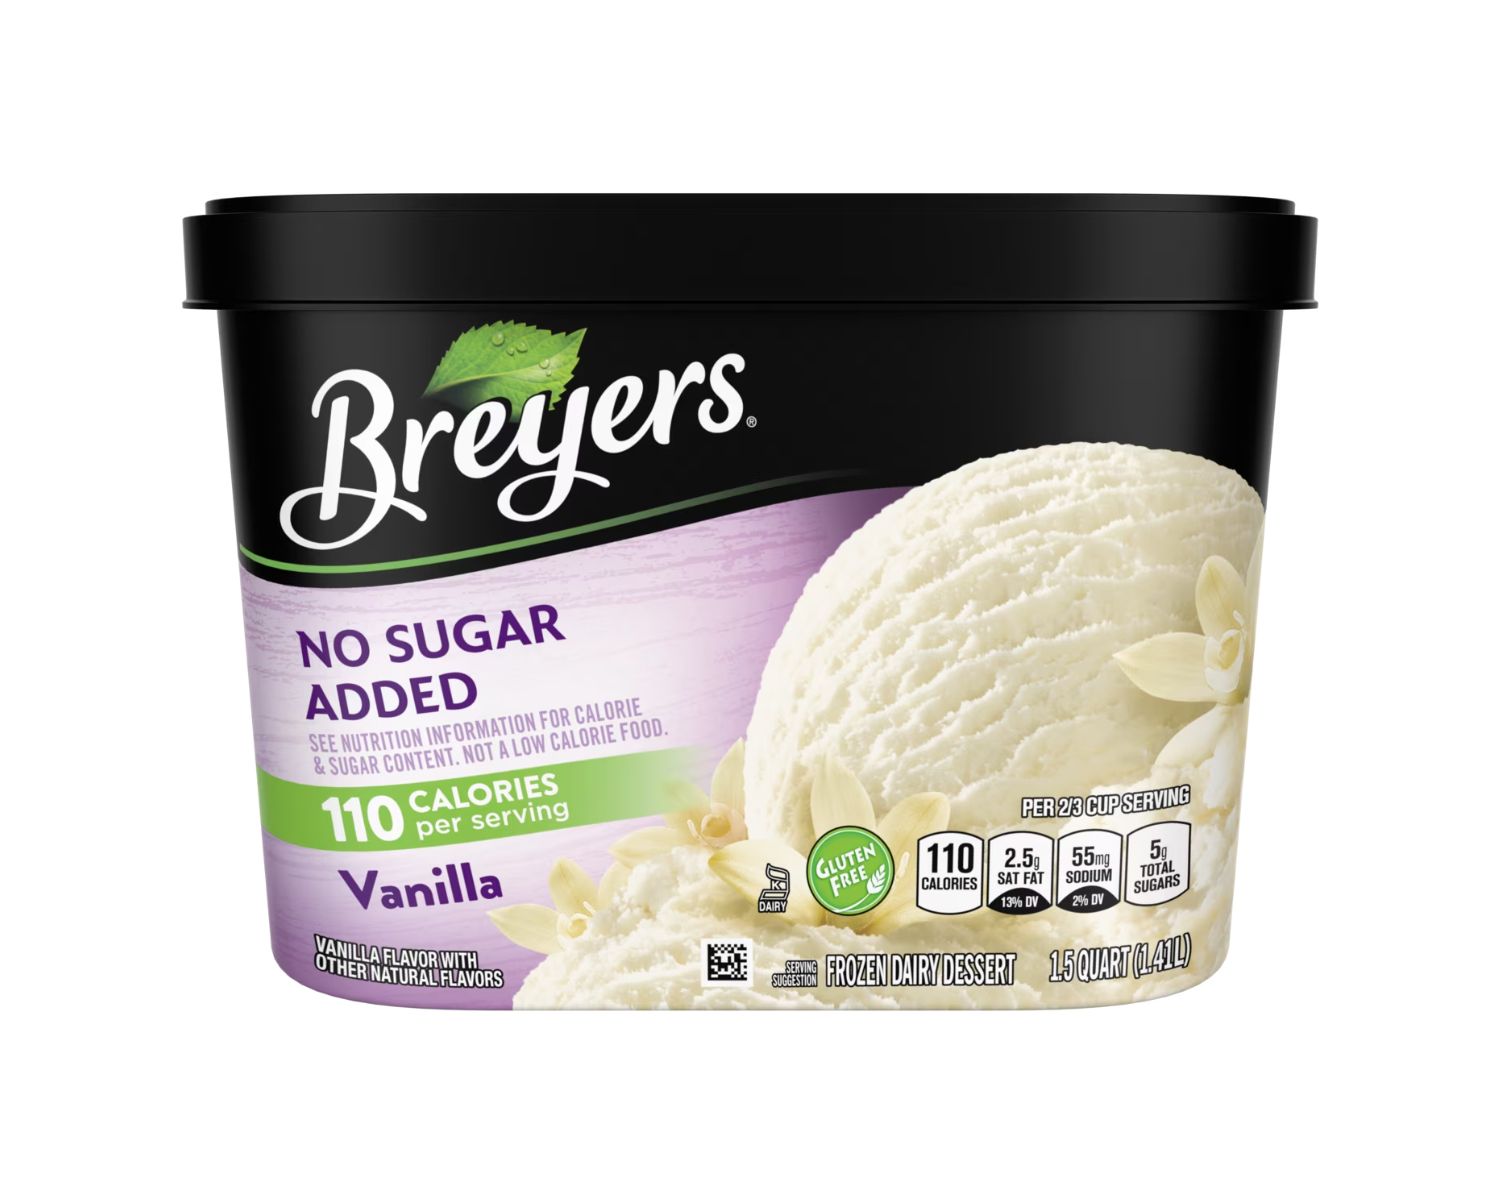 18-breyers-sugar-free-ice-cream-nutrition-facts